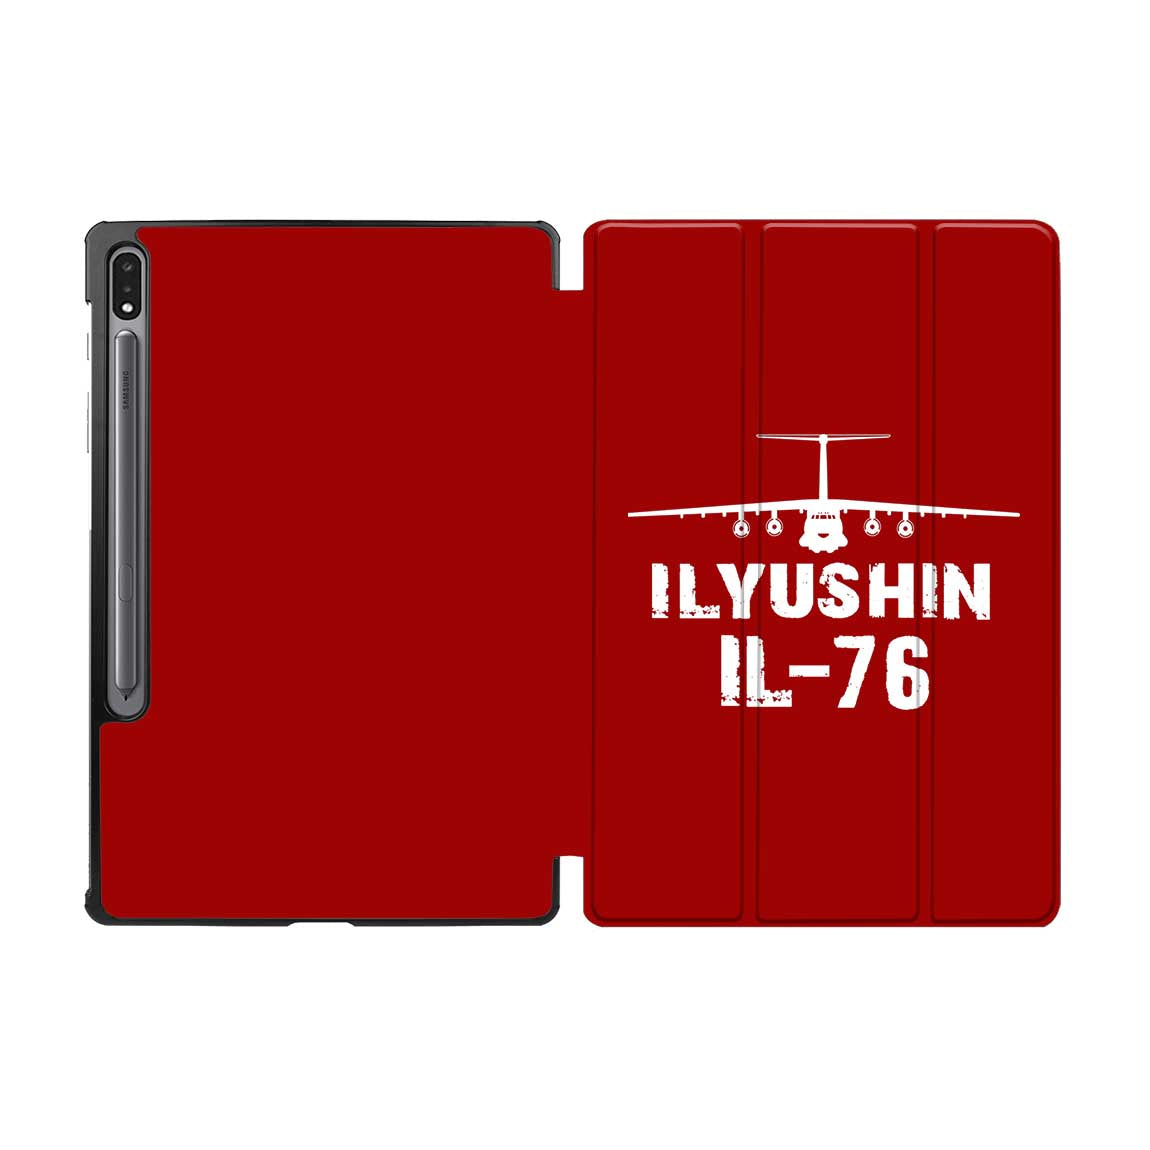 ILyushin IL-76 & Plane Designed Samsung Tablet Cases